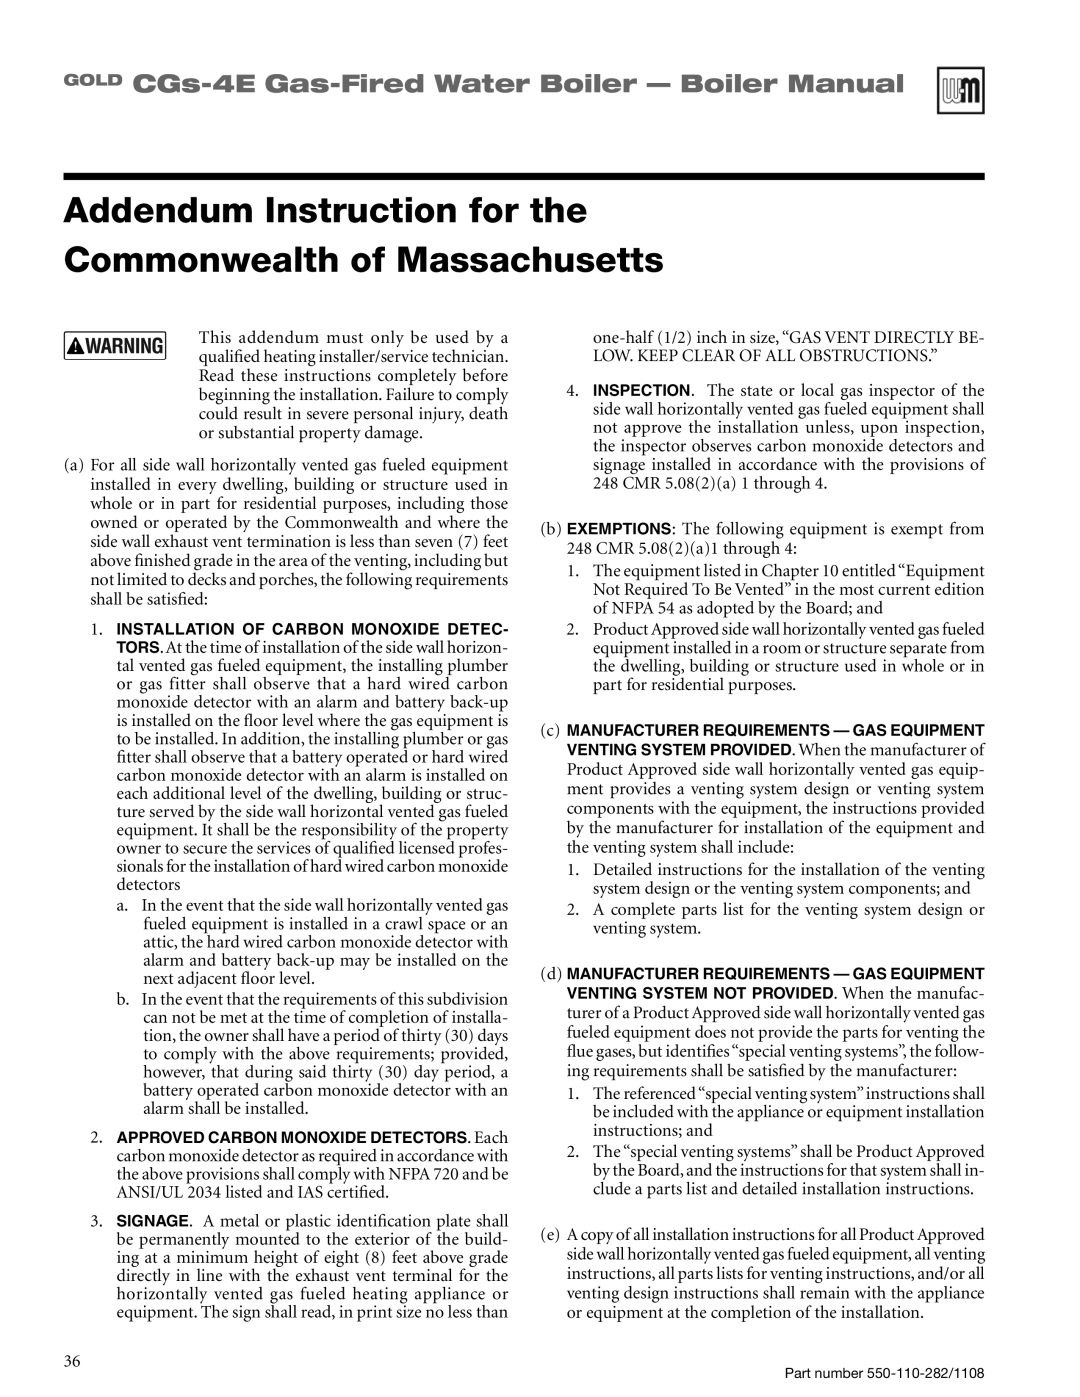 Weil-McLain CGS-4E manual Addendum Instruction for the, Commonwealth of Massachusetts 